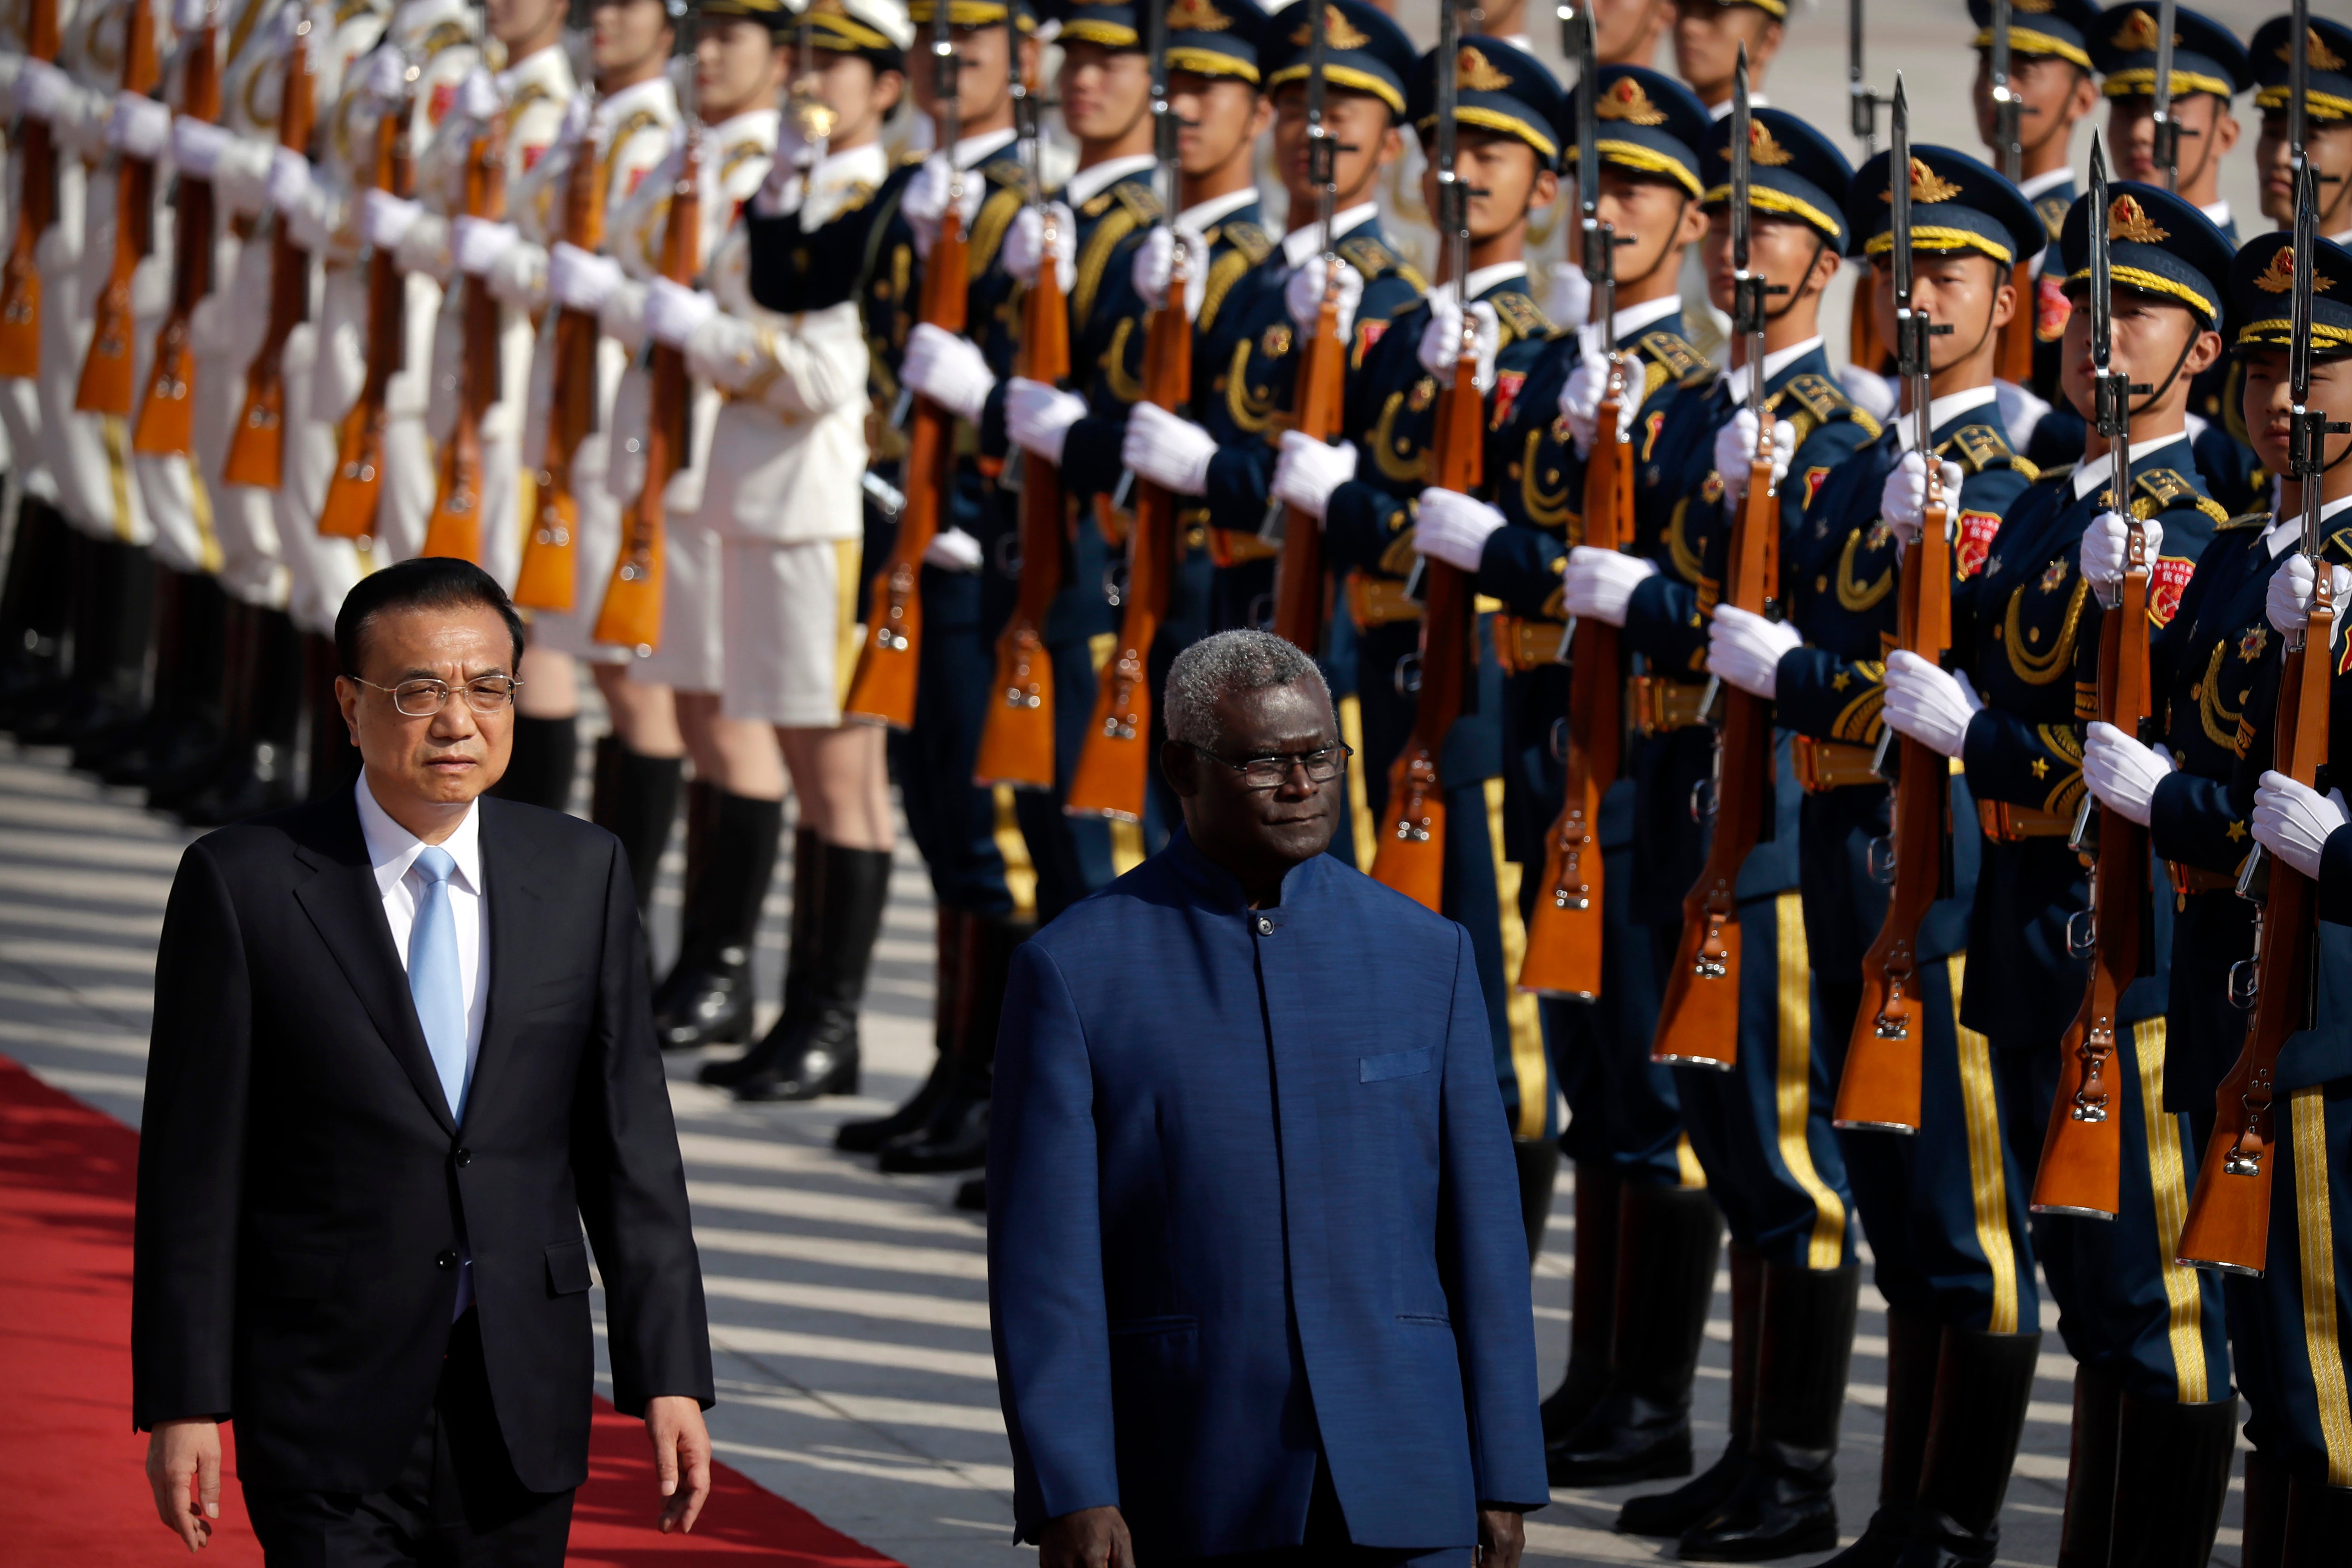 China’s Premier Li Keqiang, left, and Solomon Islands Prime Minister Manasseh Sogavare